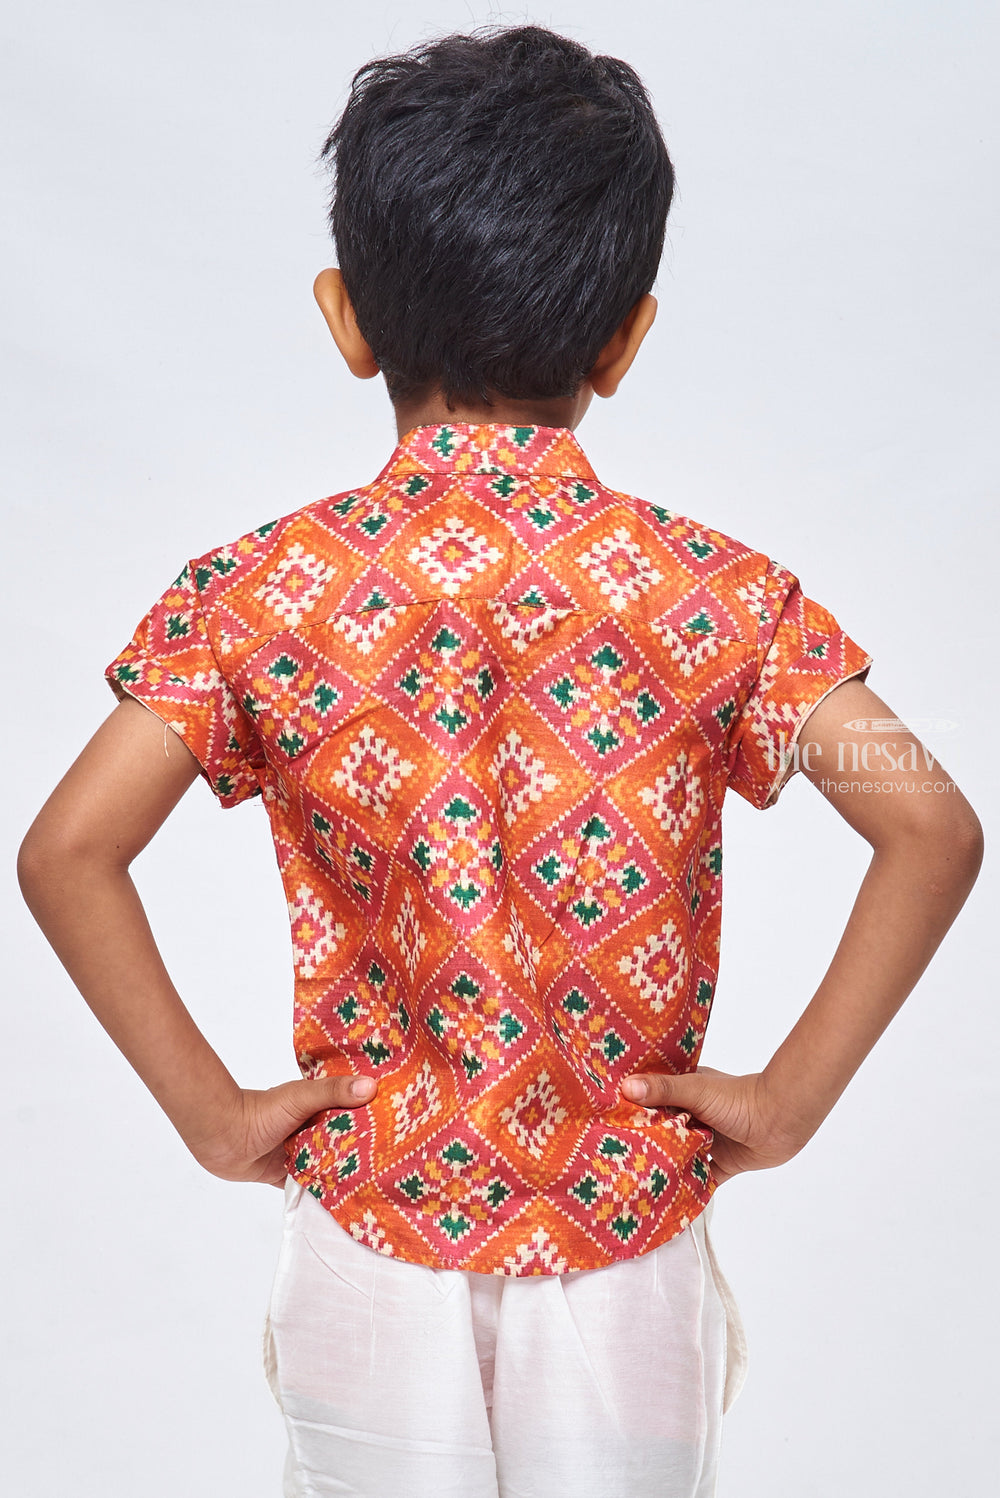 The Nesavu Boys Silk Shirt Regal Patola Silk Boys' Shirts: Luxurious Attire for Special Occasions Nesavu Boys Patola Printed Shirts Online | Boy Baby shirts | The Nesavu